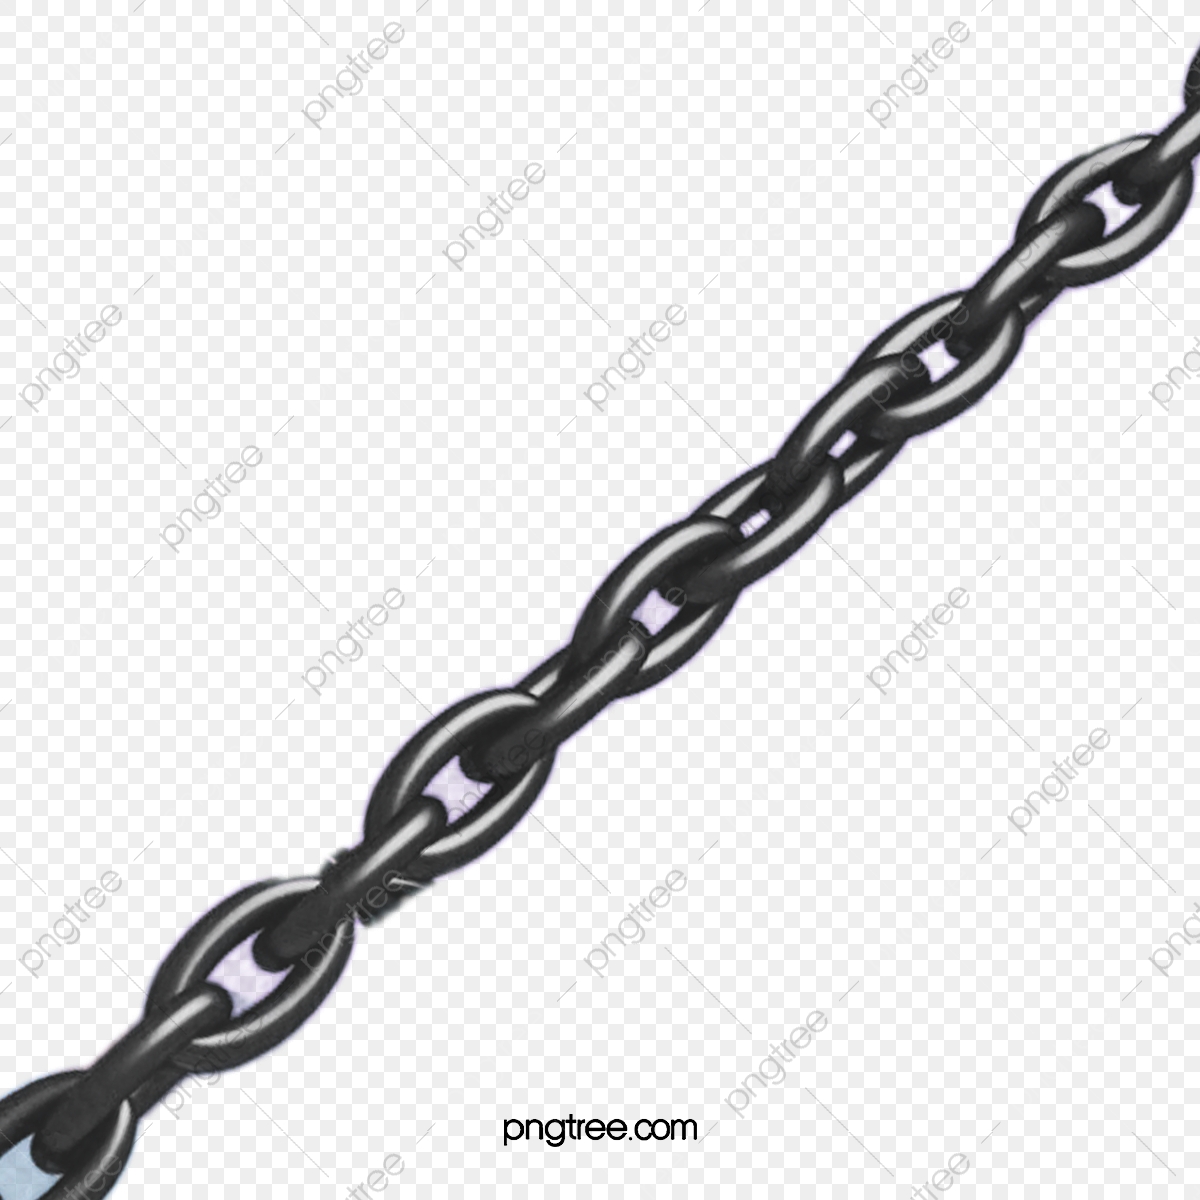 A of chains iron. Chain clipart long chain